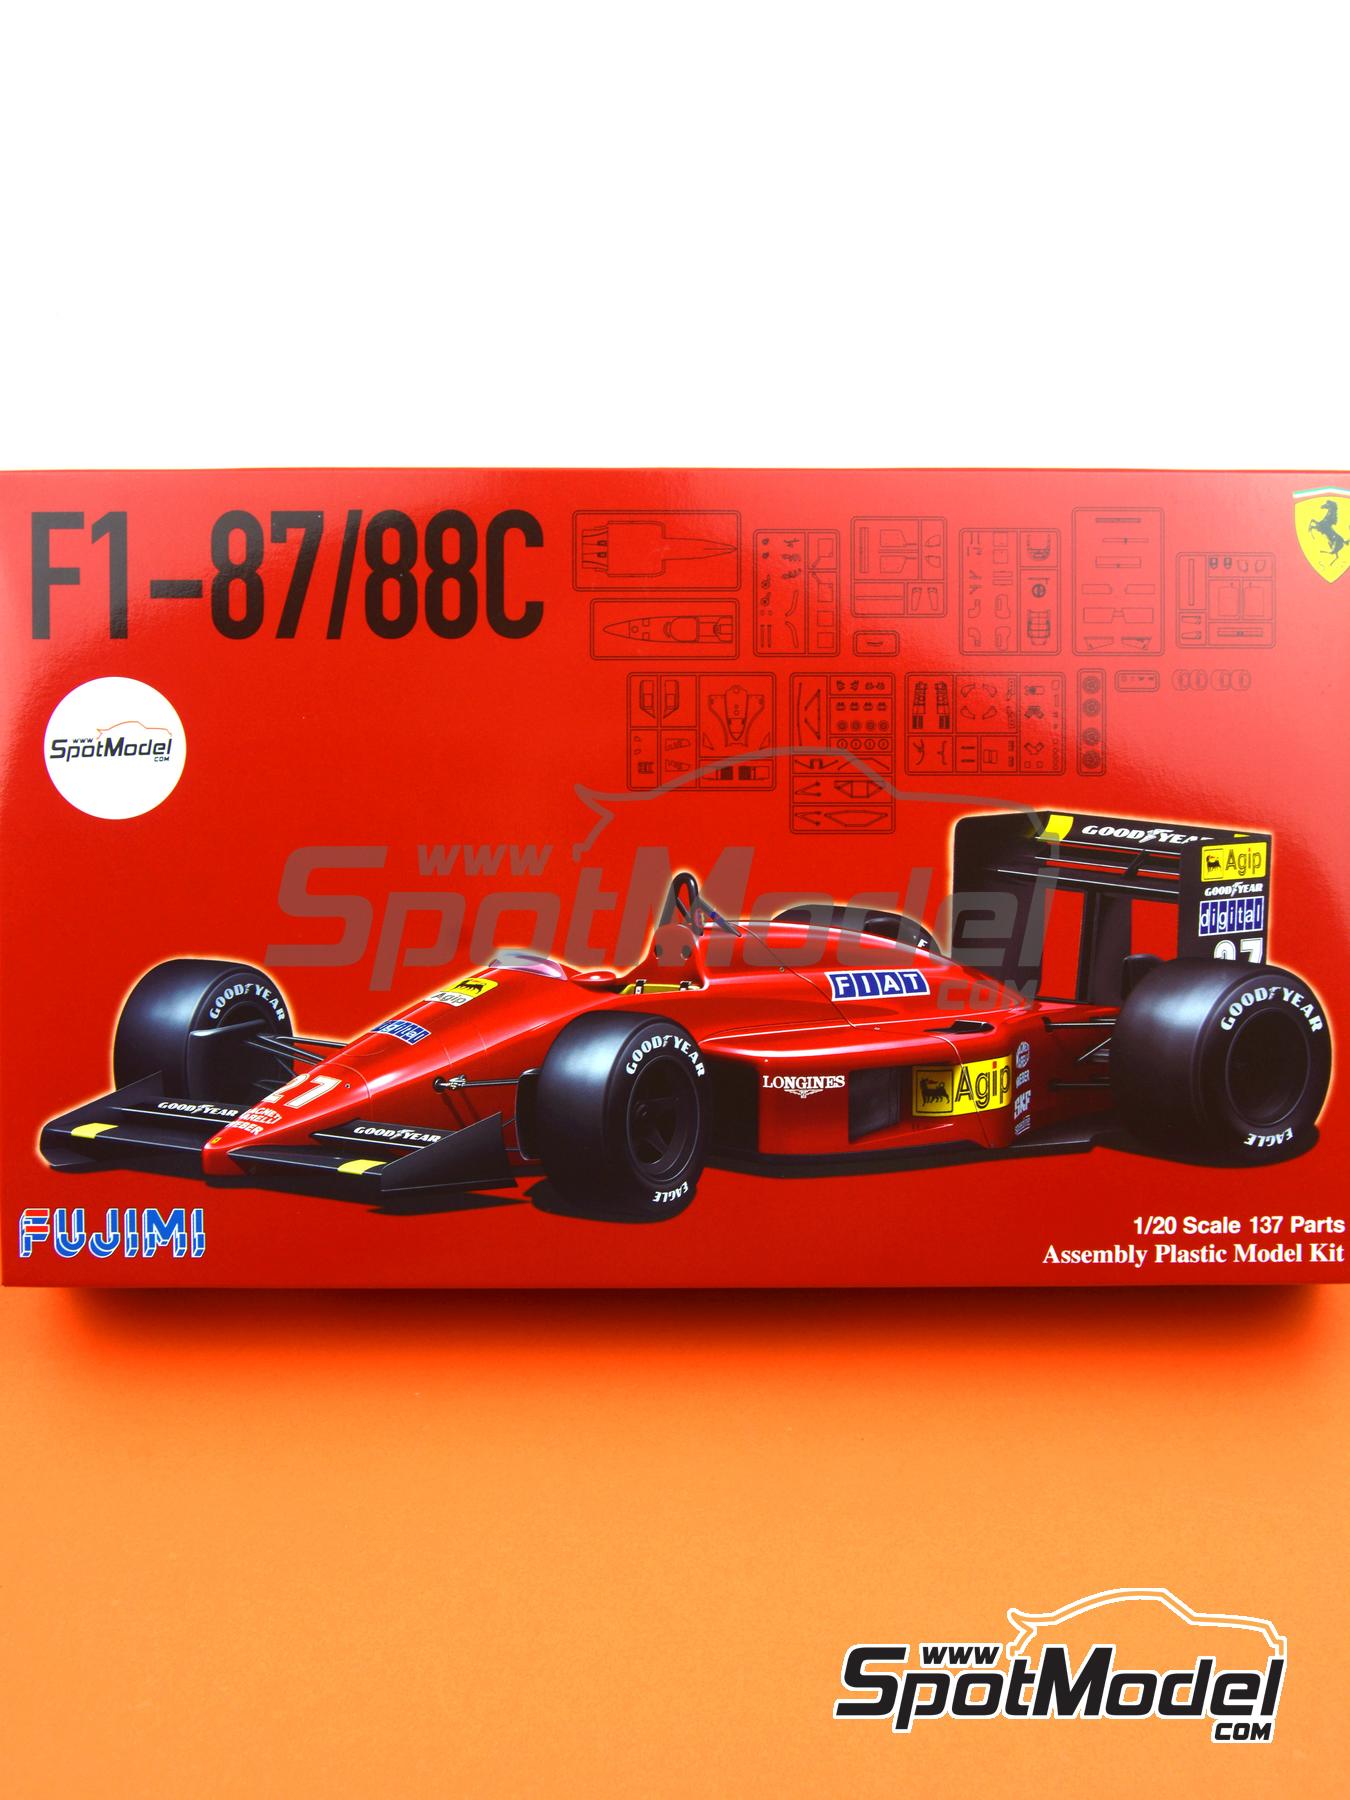 Ferrari F1 87/88C Equipo Scuderia Ferrari patrocinado por Fiat - Campeonato  del Mundo FIA de Formula 1 1988. Maqueta de coche en escala 1/20 fabricado